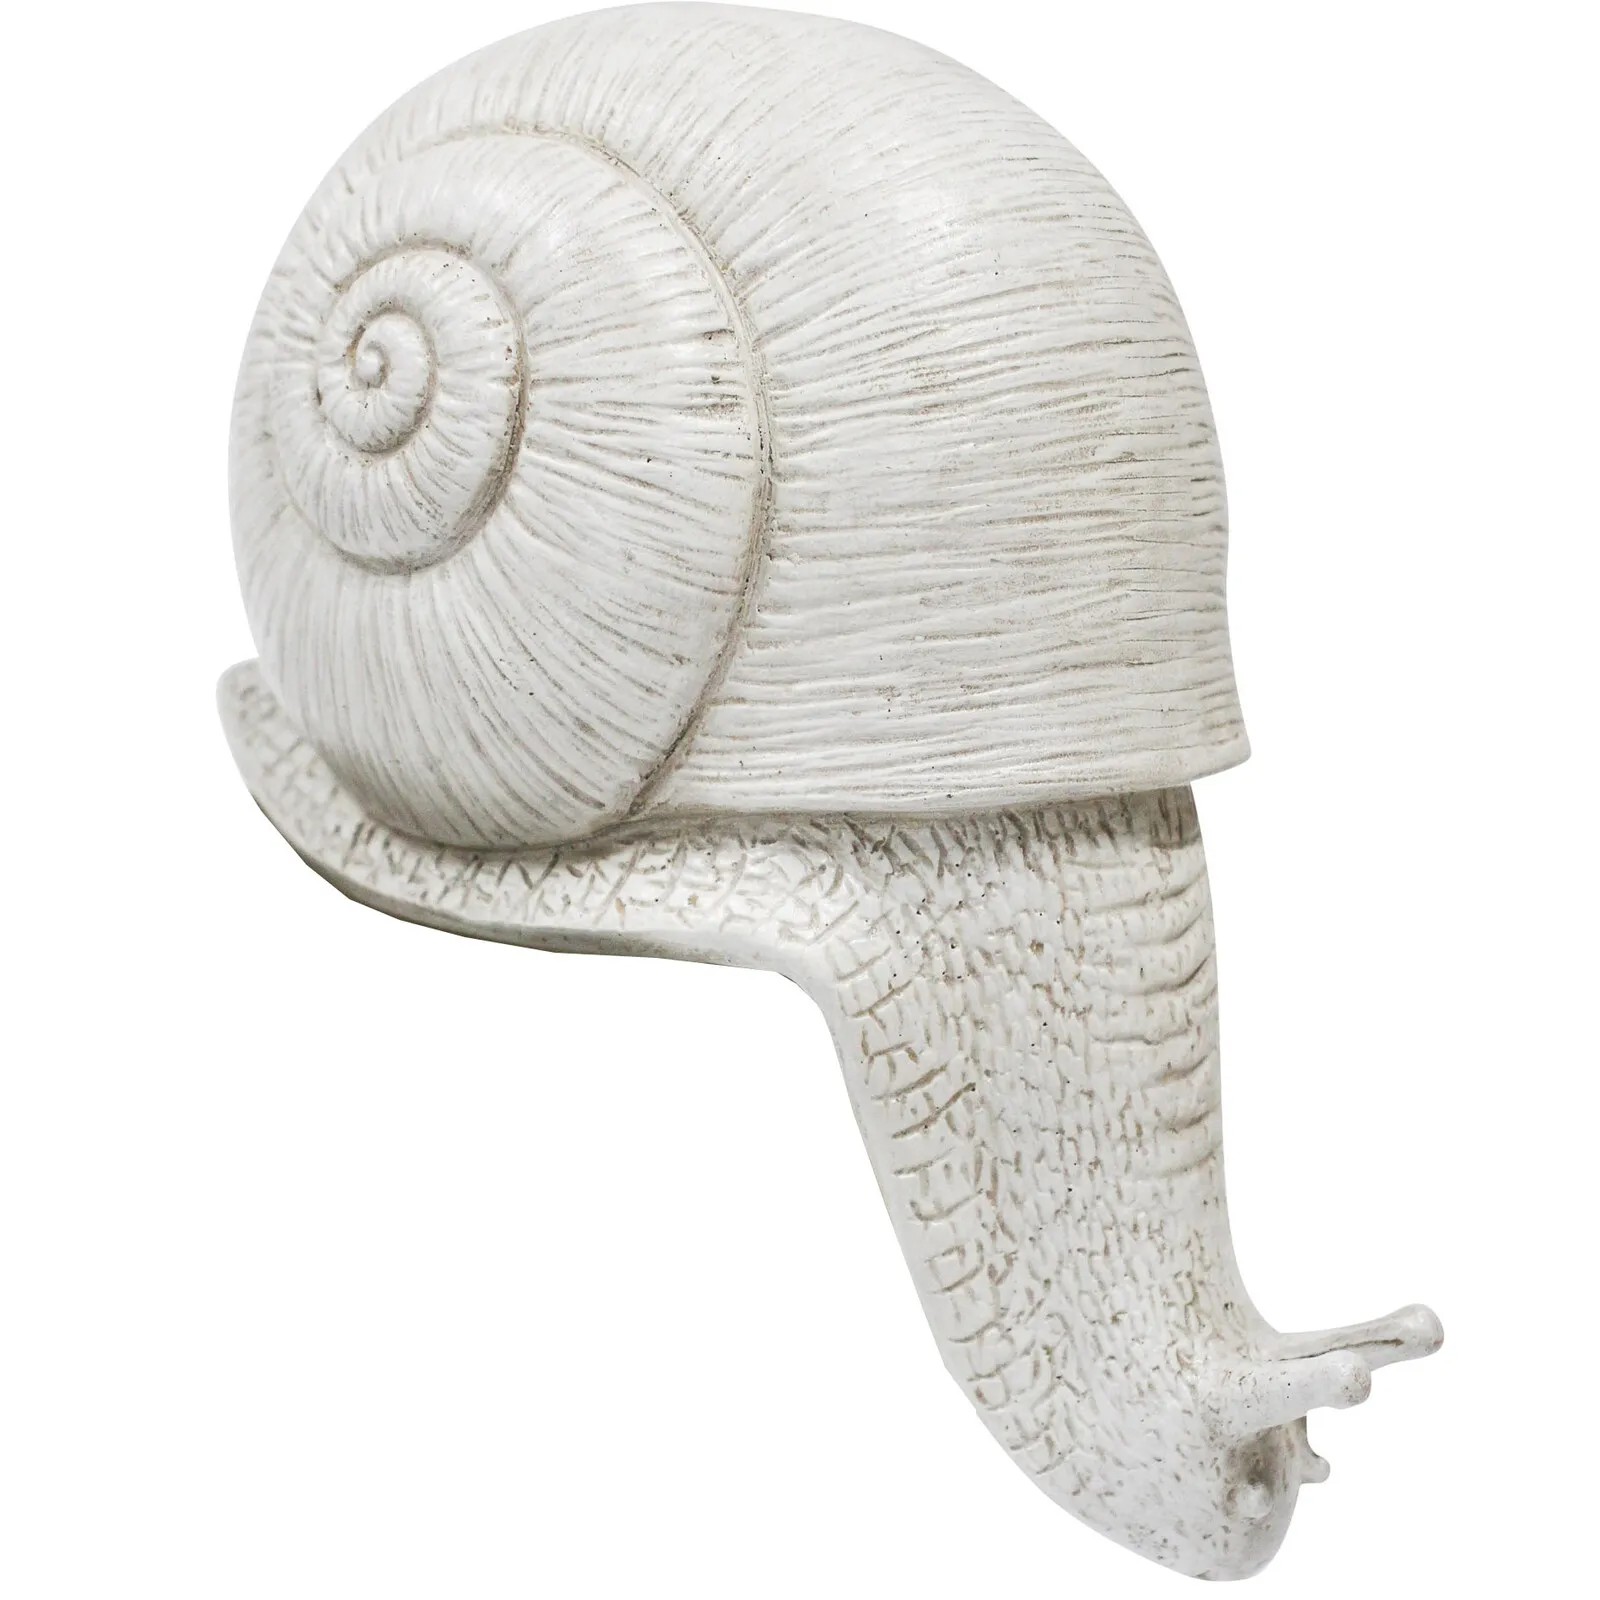 Shelf Snail